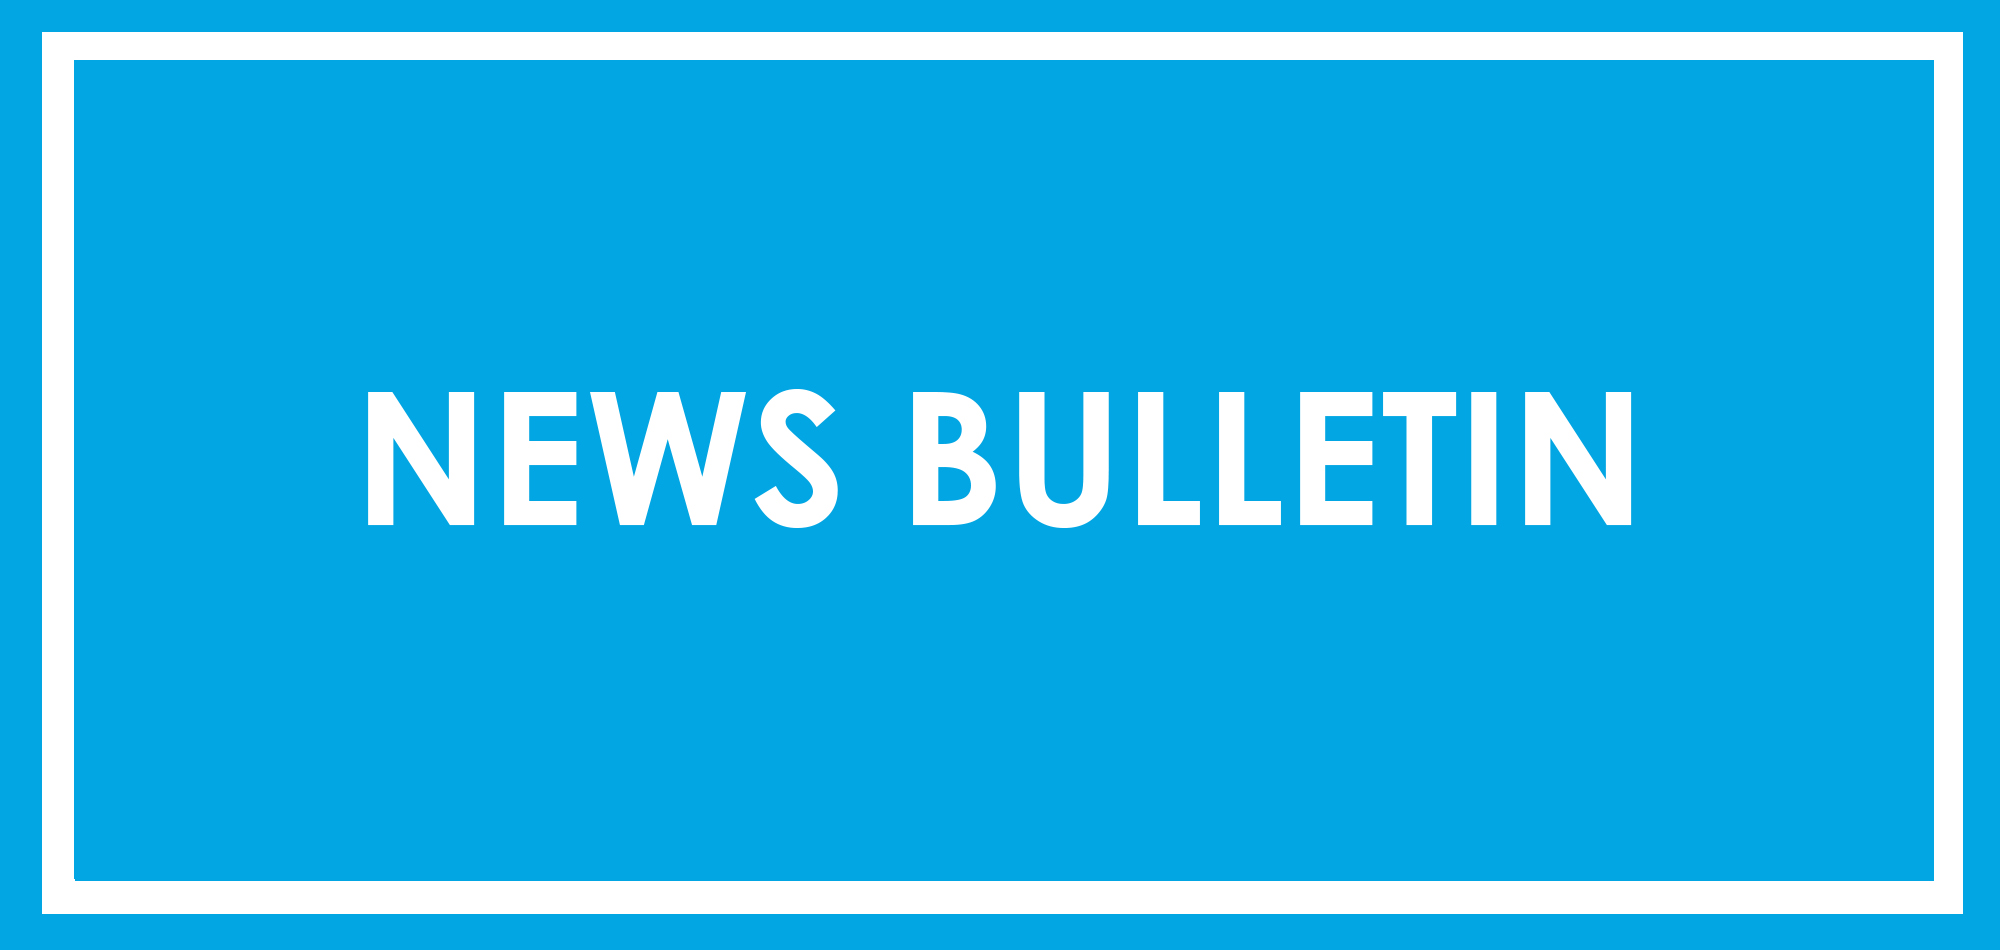 News Bulletin - 03.02.21